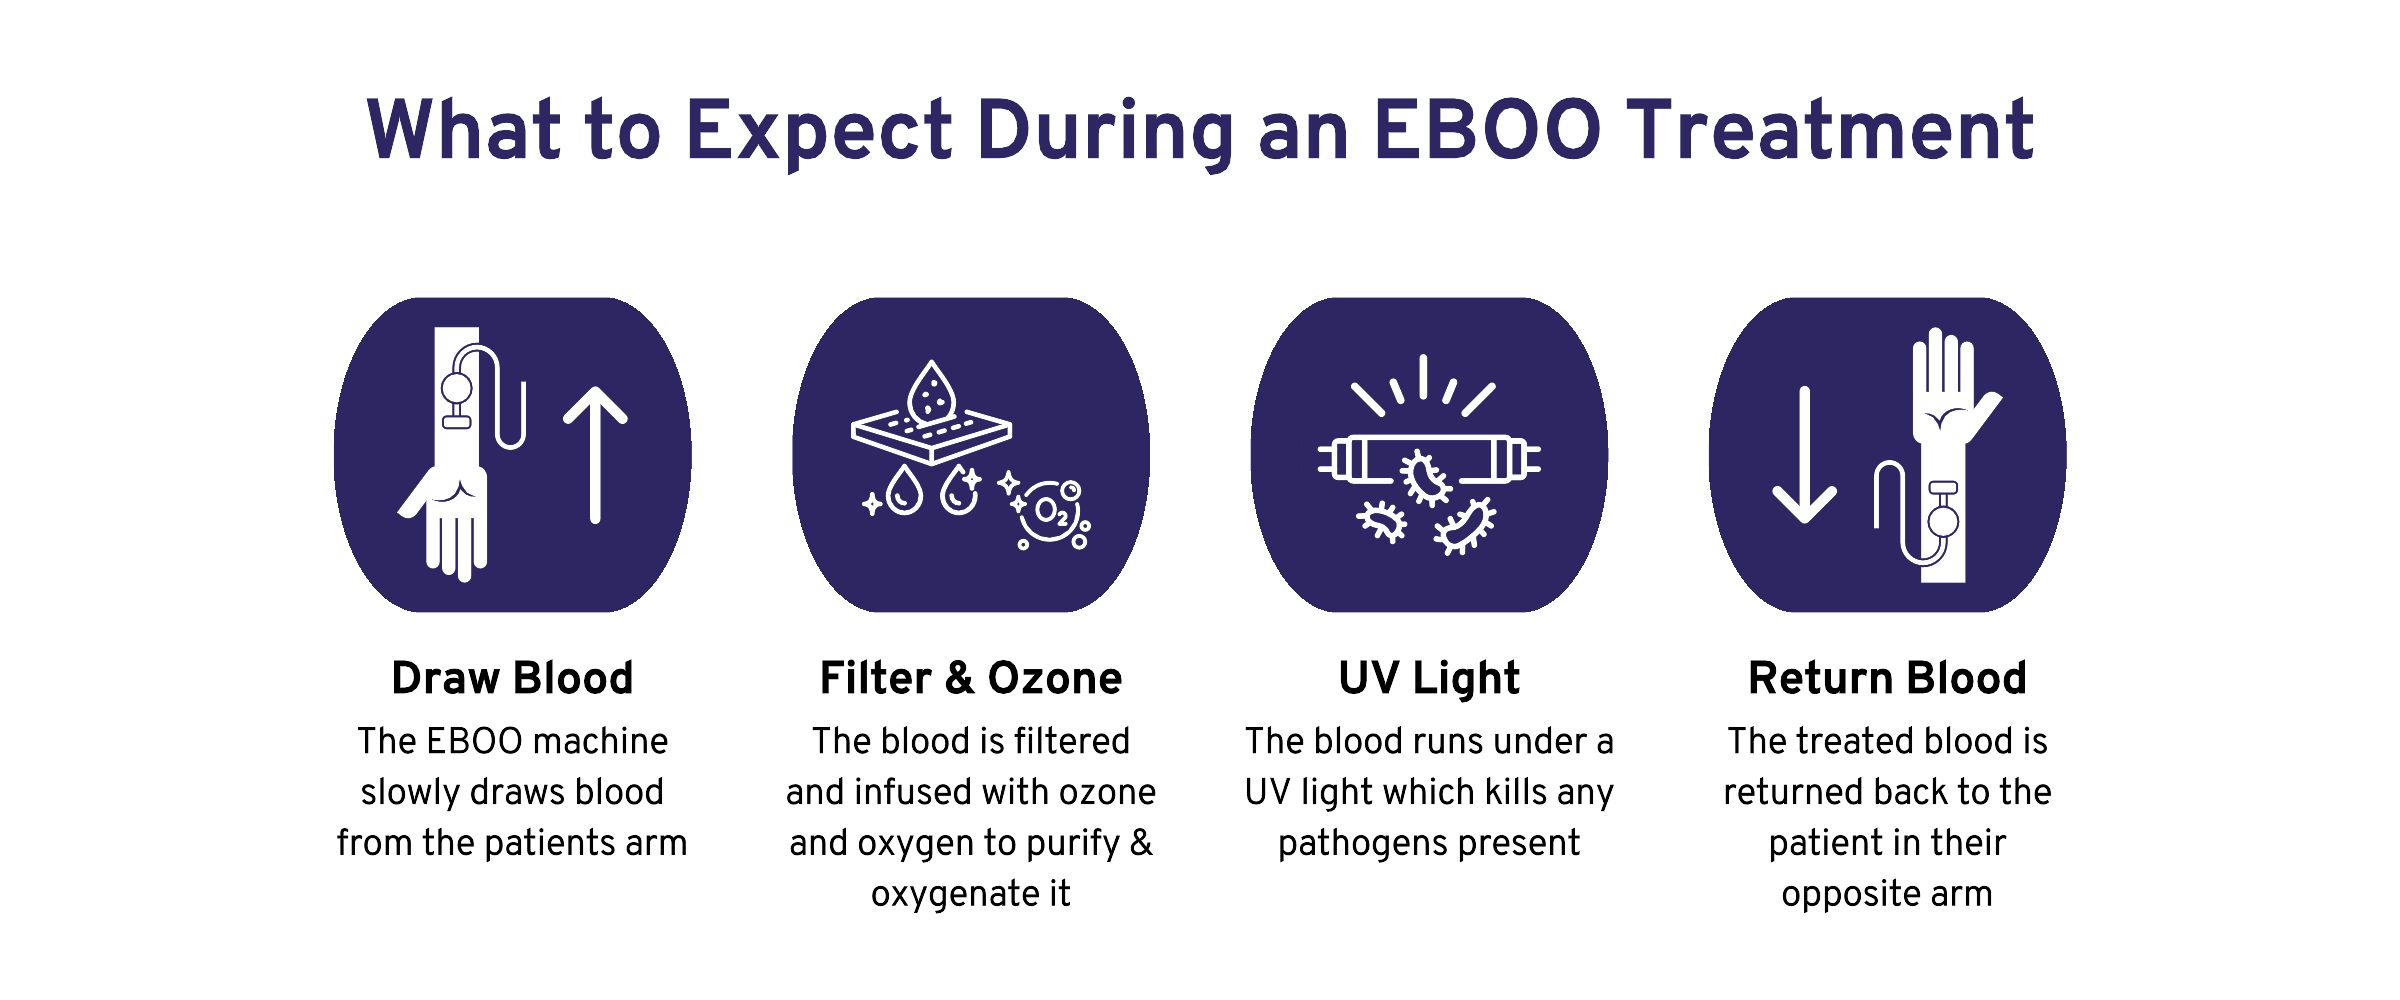 EBOO Treatment Oxygenation and Ozone 4